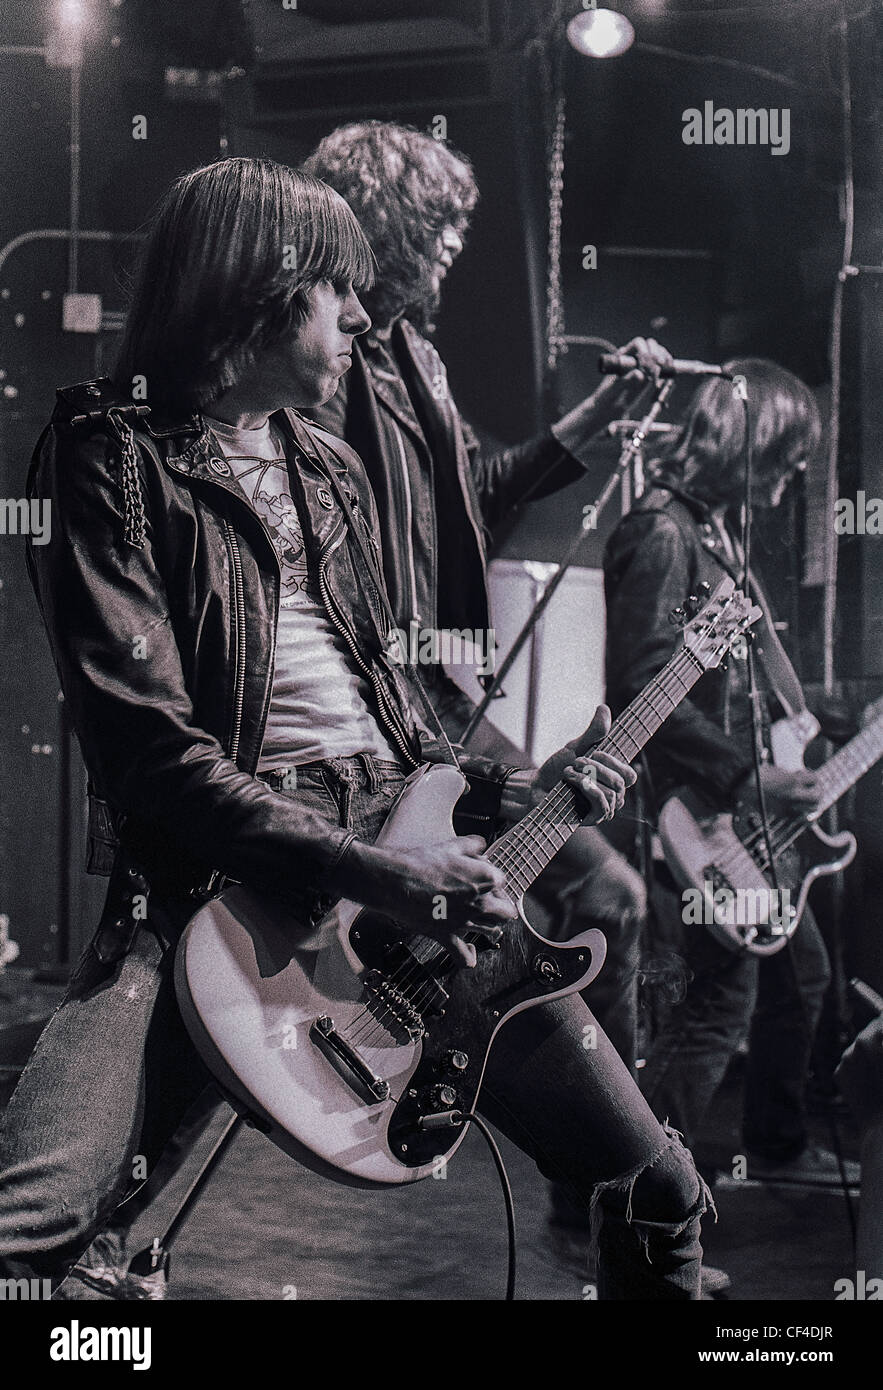 New York, NY, USA - Nightclub C.B.G.B.'s, Interior, con i Ramones, Punk Rock Music Band che suonano sul palco, Johnny Ramone, 1977, Punk Culture 70s Foto Stock